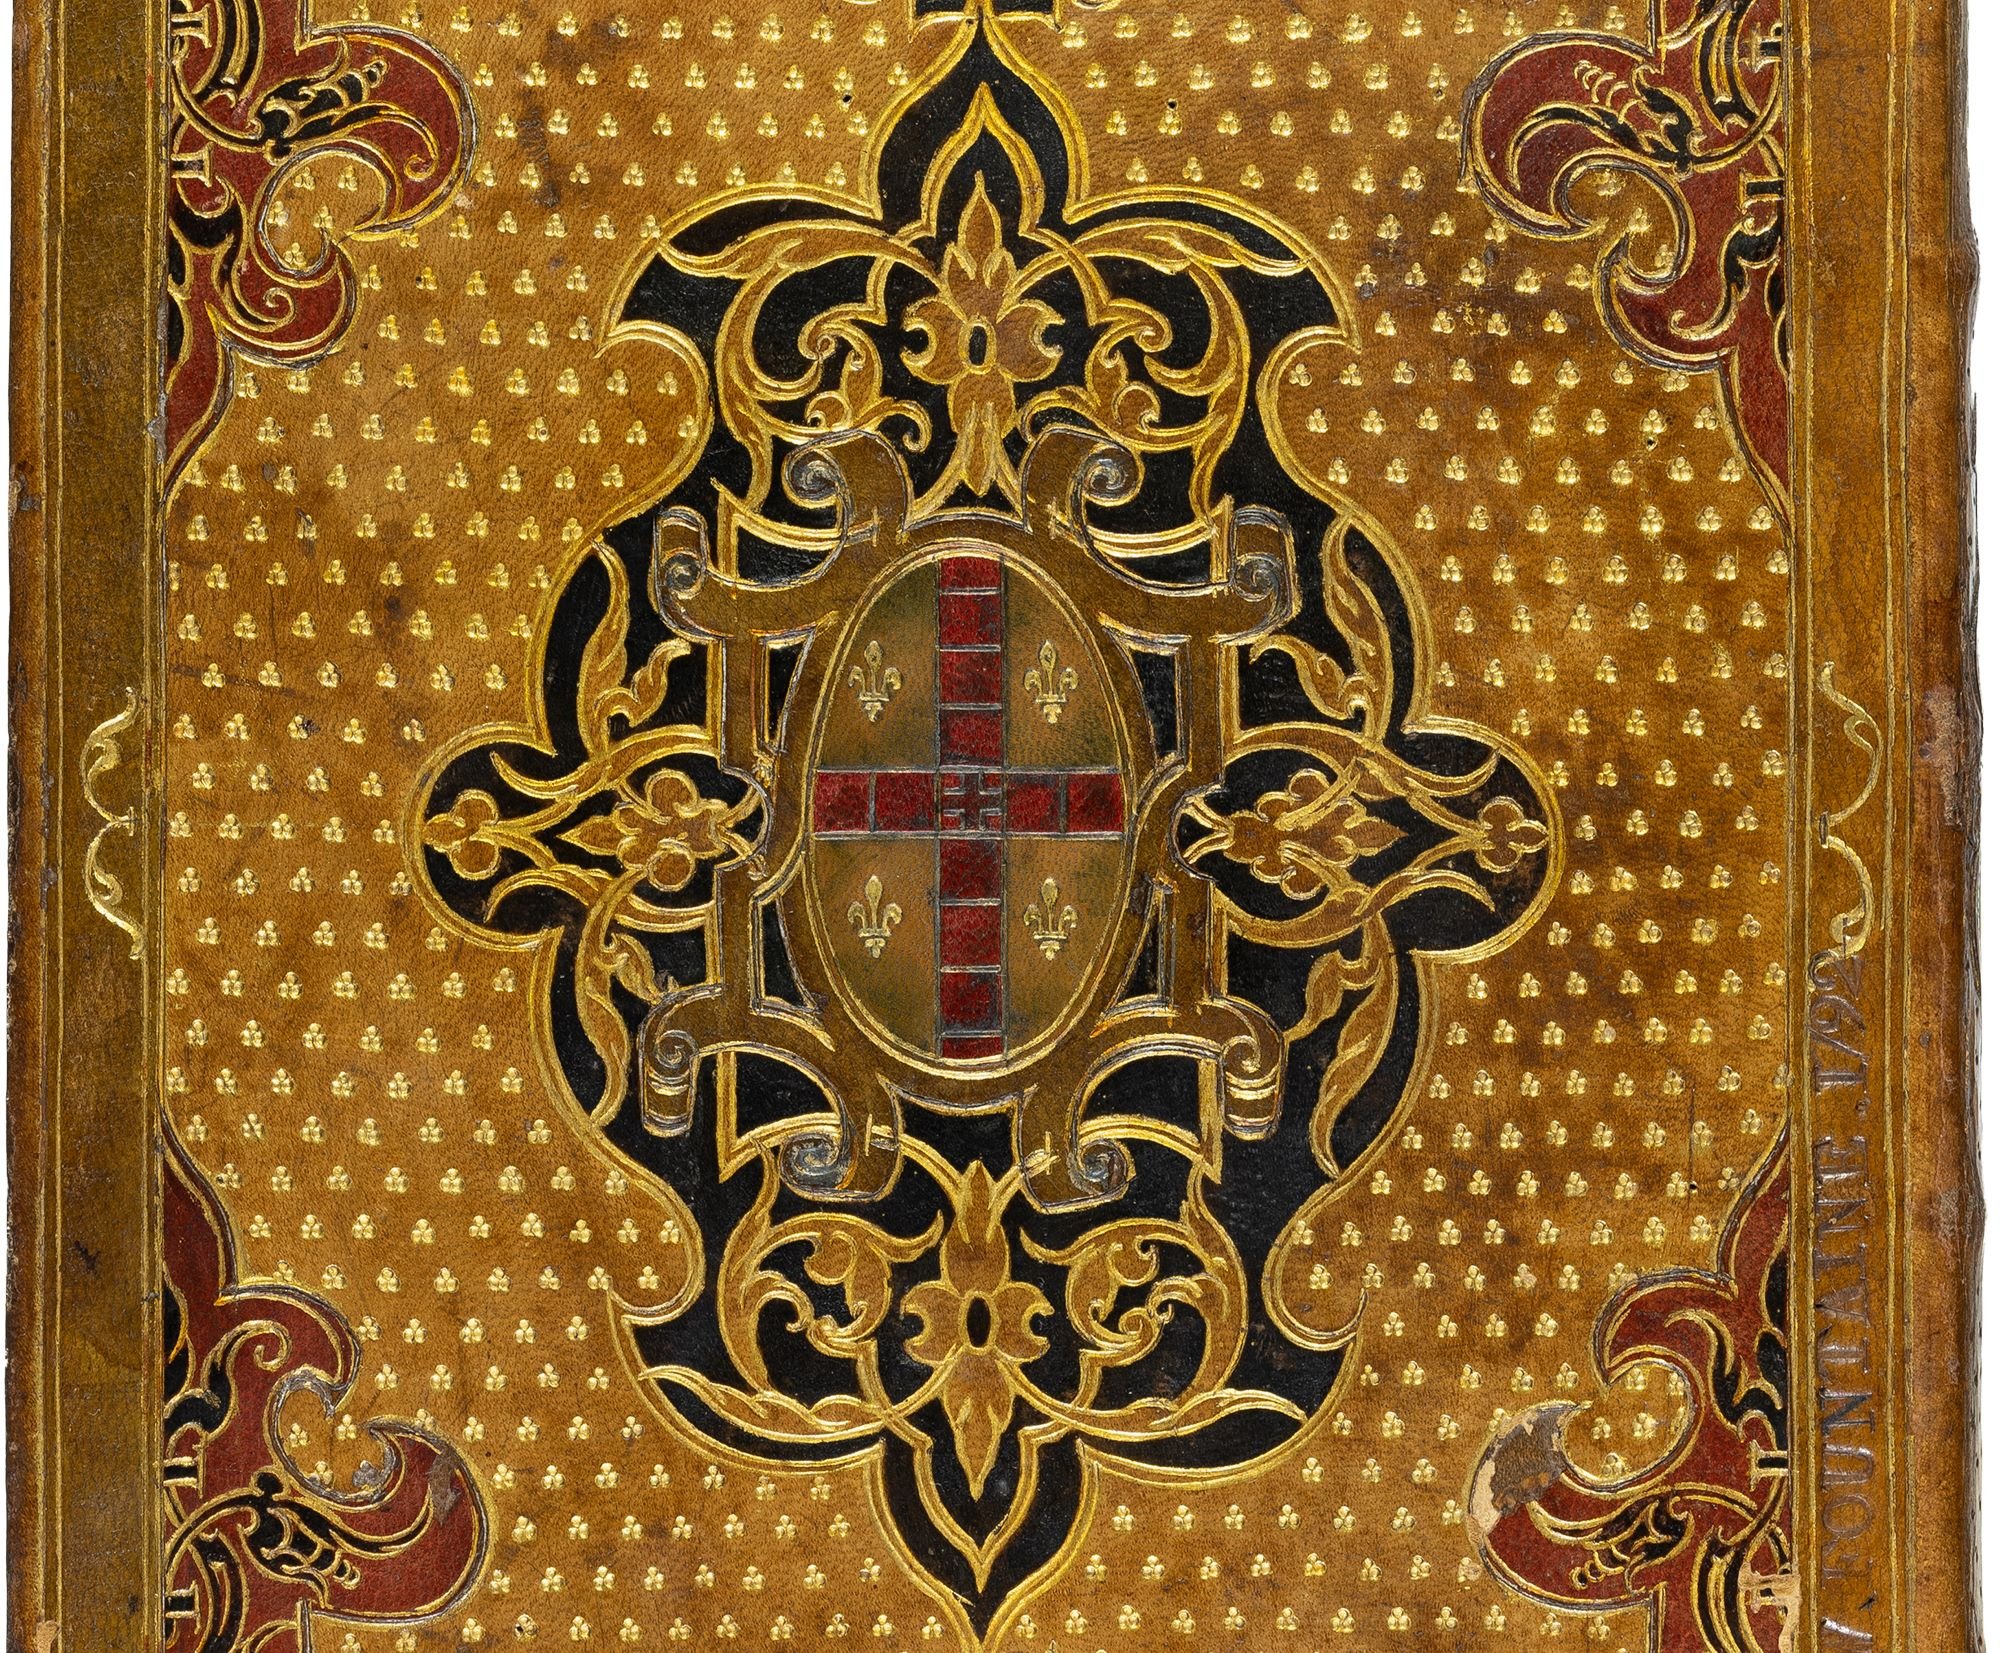 Vergil-1502-opera-mosaic-binding-gomar-estienne-king-henri-ii-woddcuts-strassburg-grueninger-03 (2)-detail.jpg